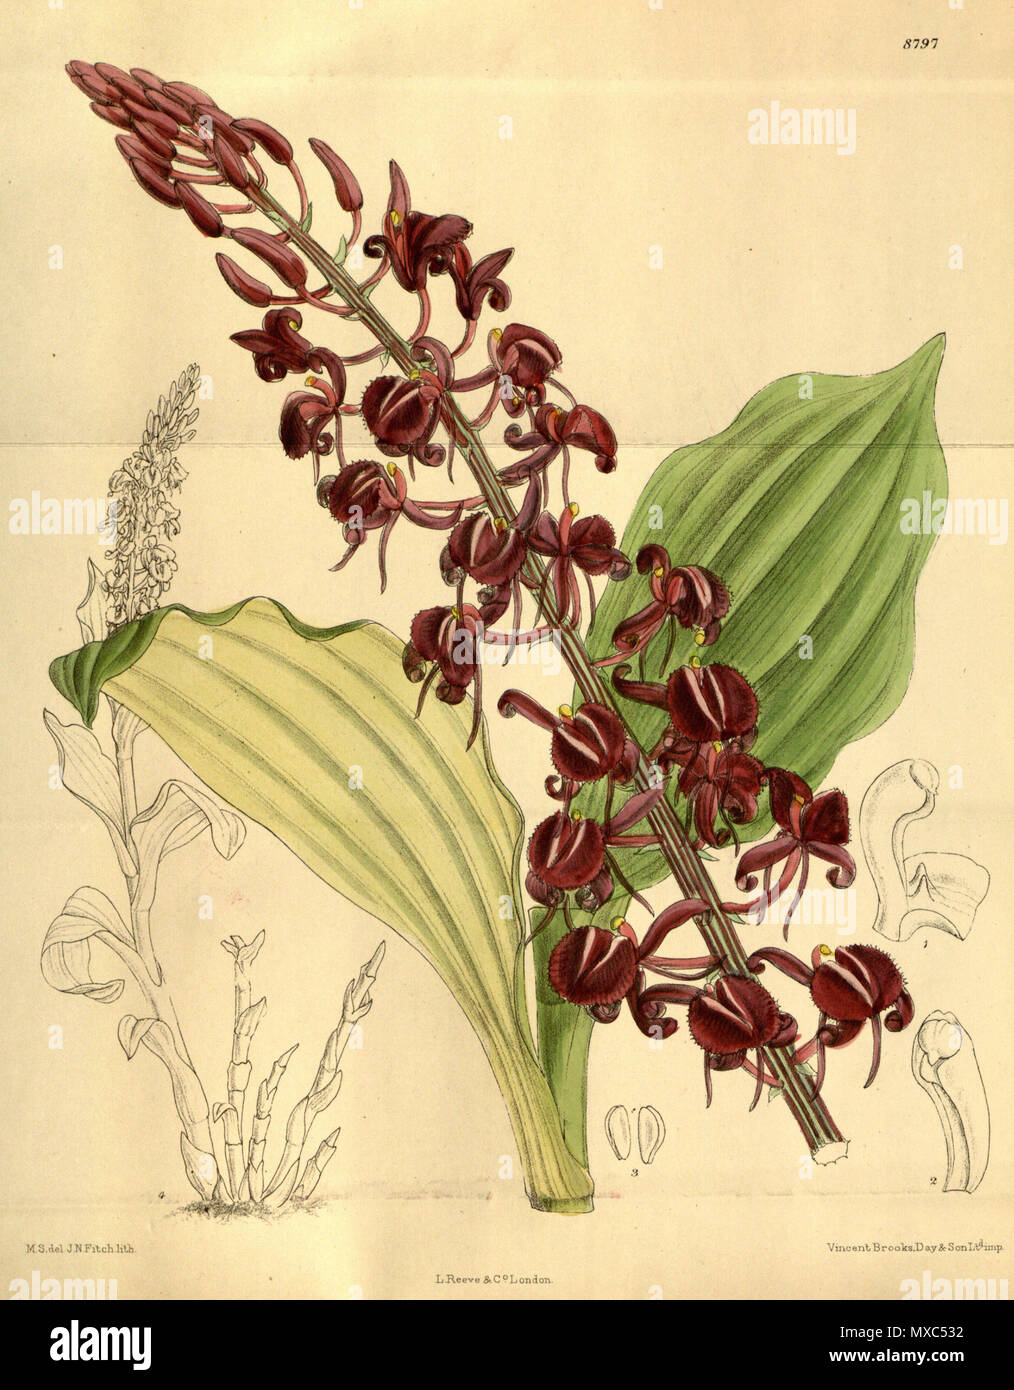 . Liparis macrantha (= Liparis gigantea), Orchidaceae . 1919. M.S. del., J.N.Fitch lith. 373 Liparis macrantha 145-8797 Stock Photo